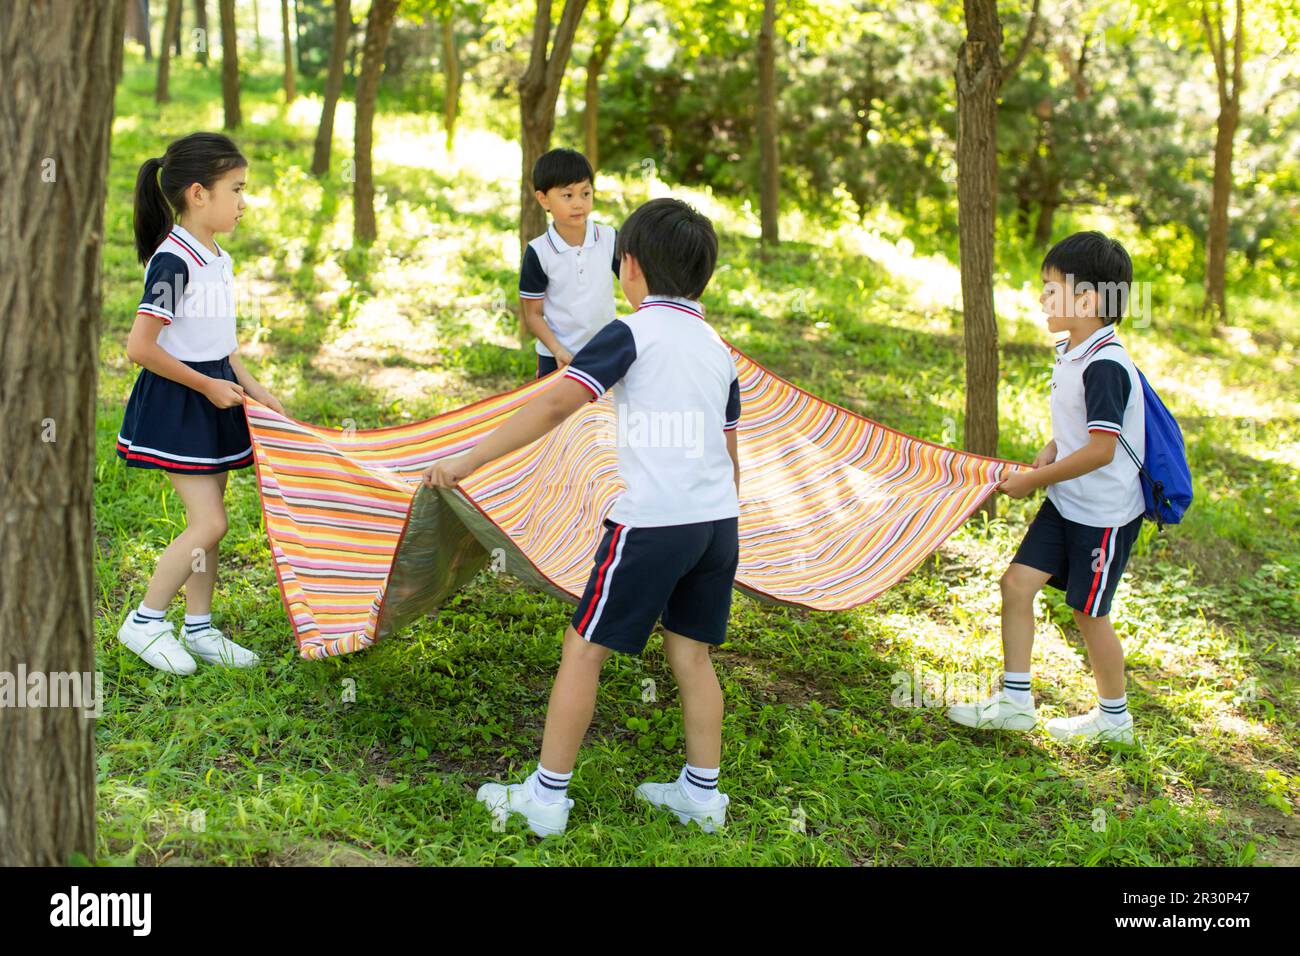 Cheerful Chinese school children picnicking outdoors Stock Photo